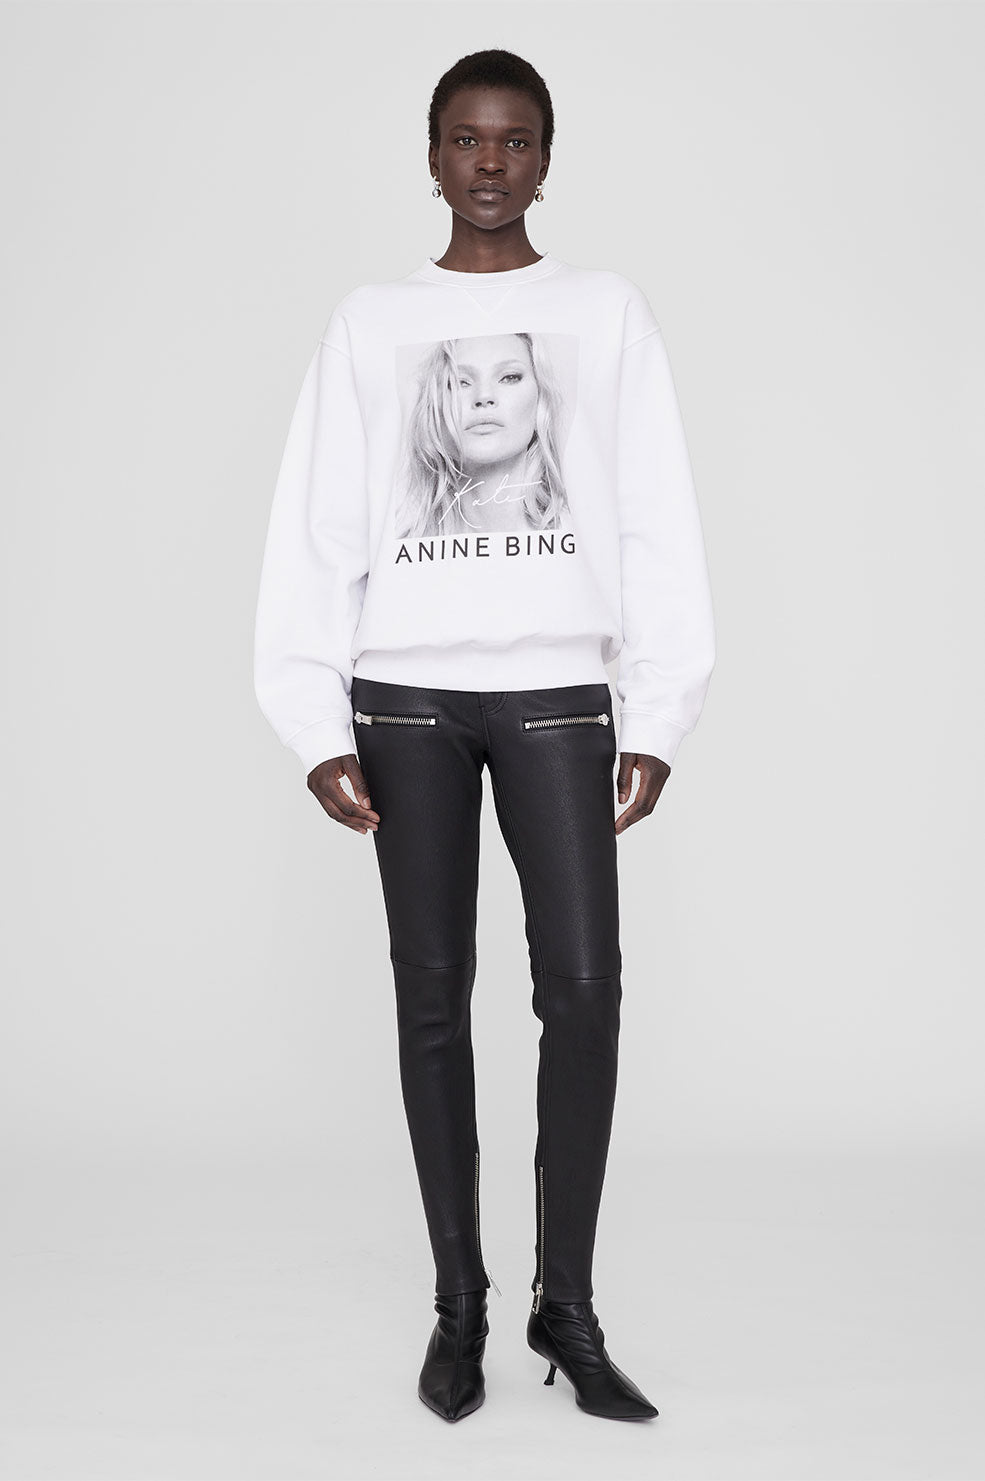 Anine Bing Jaci Sweatshirt Smiley in White - Black White Denim